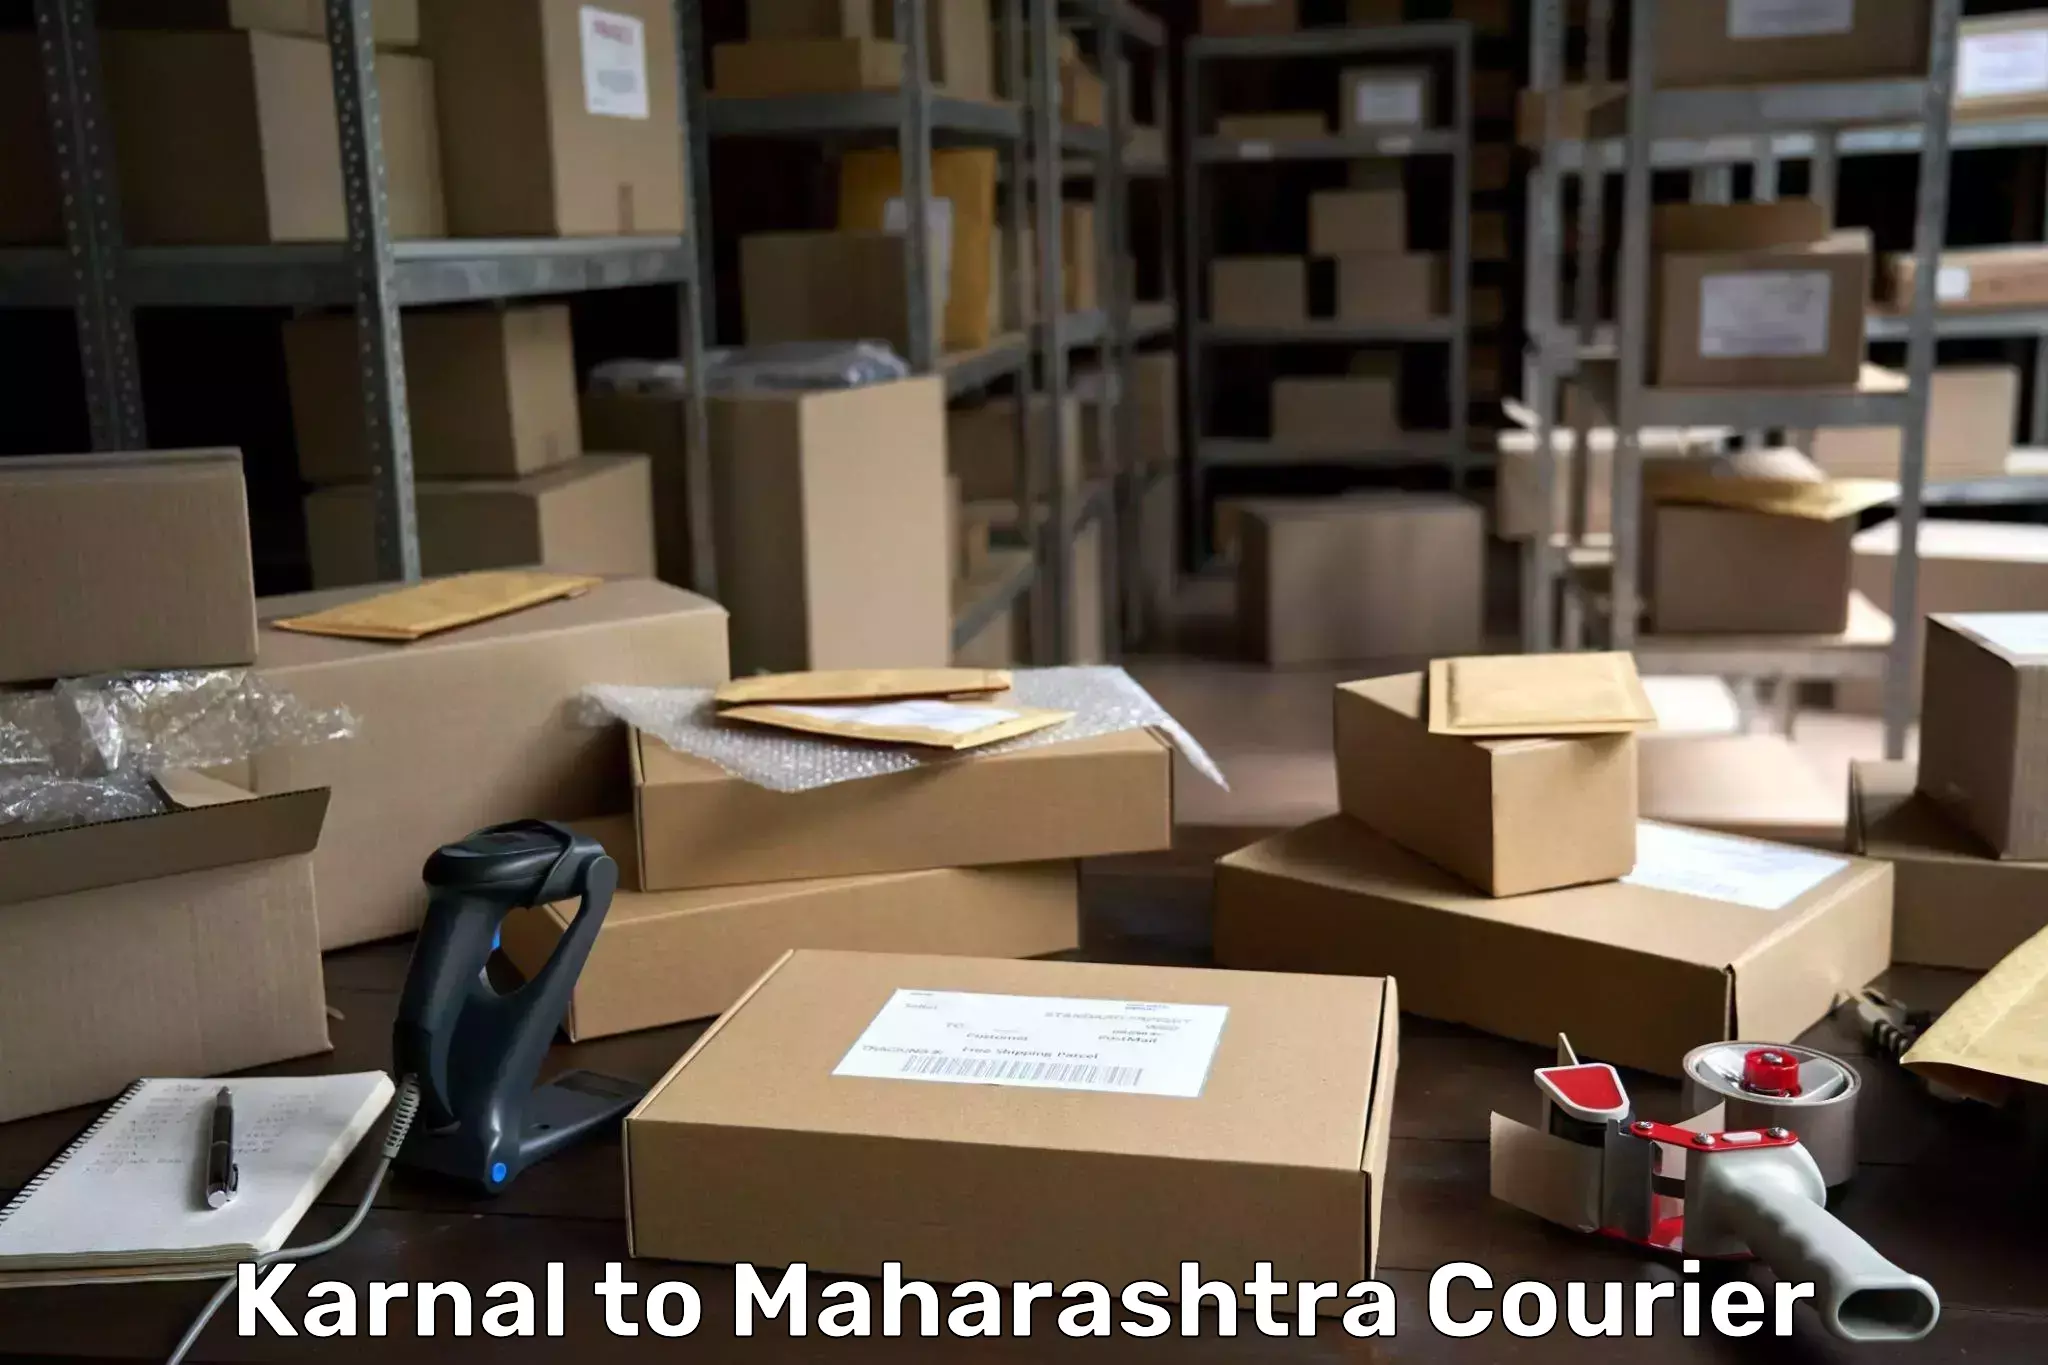 Courier service comparison Karnal to Maharashtra